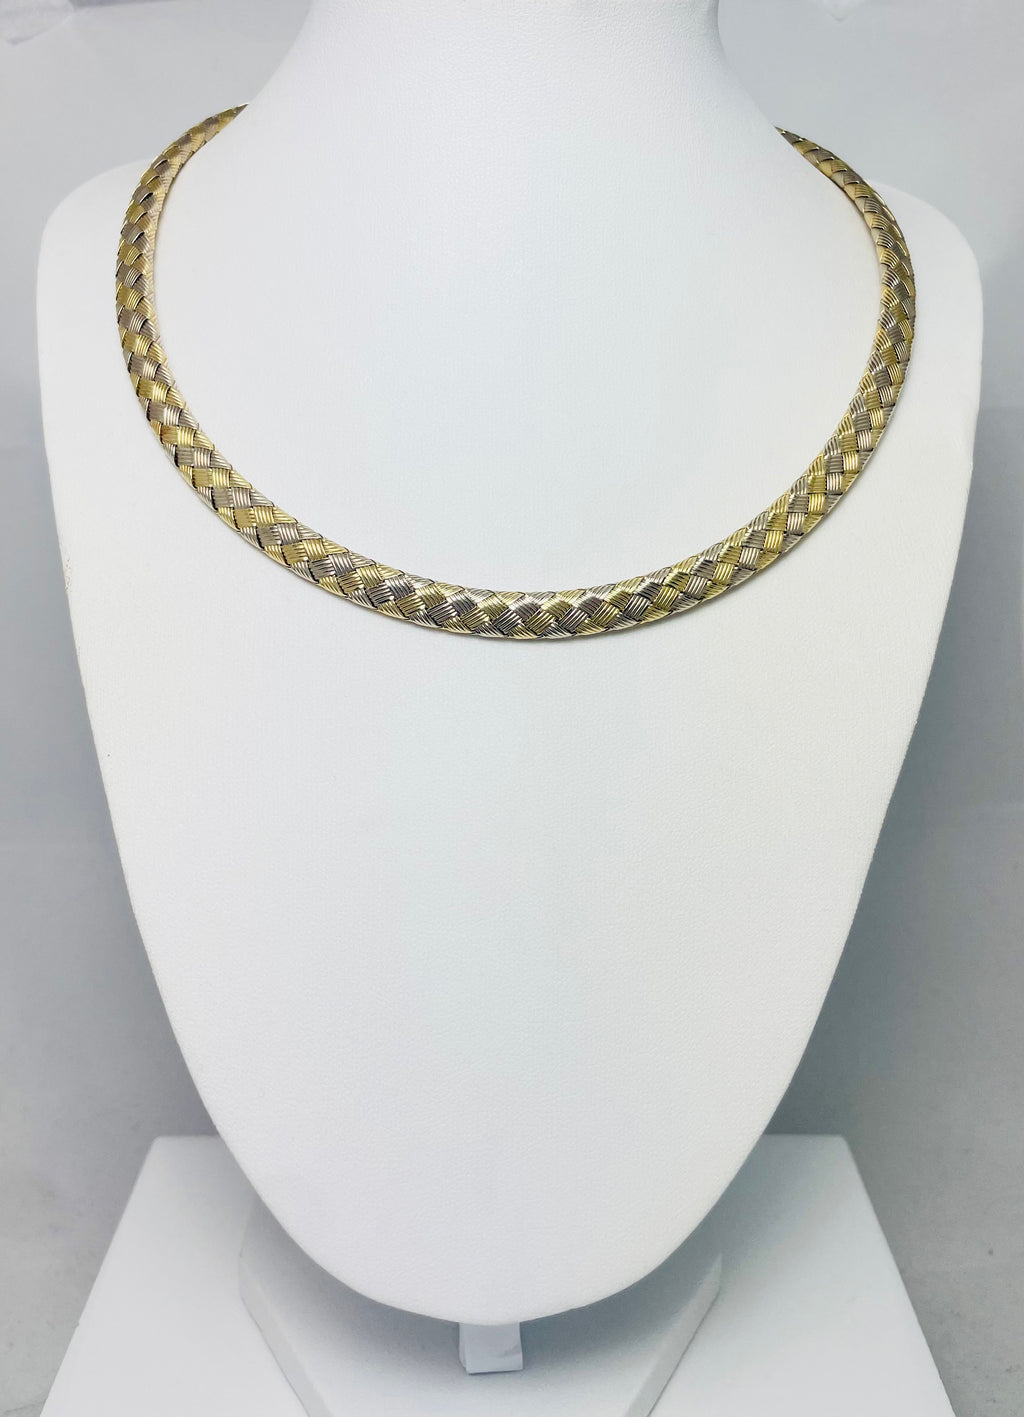 Classy 14k Two-Tone Gold Hollow Semi Rigid Collar Necklace